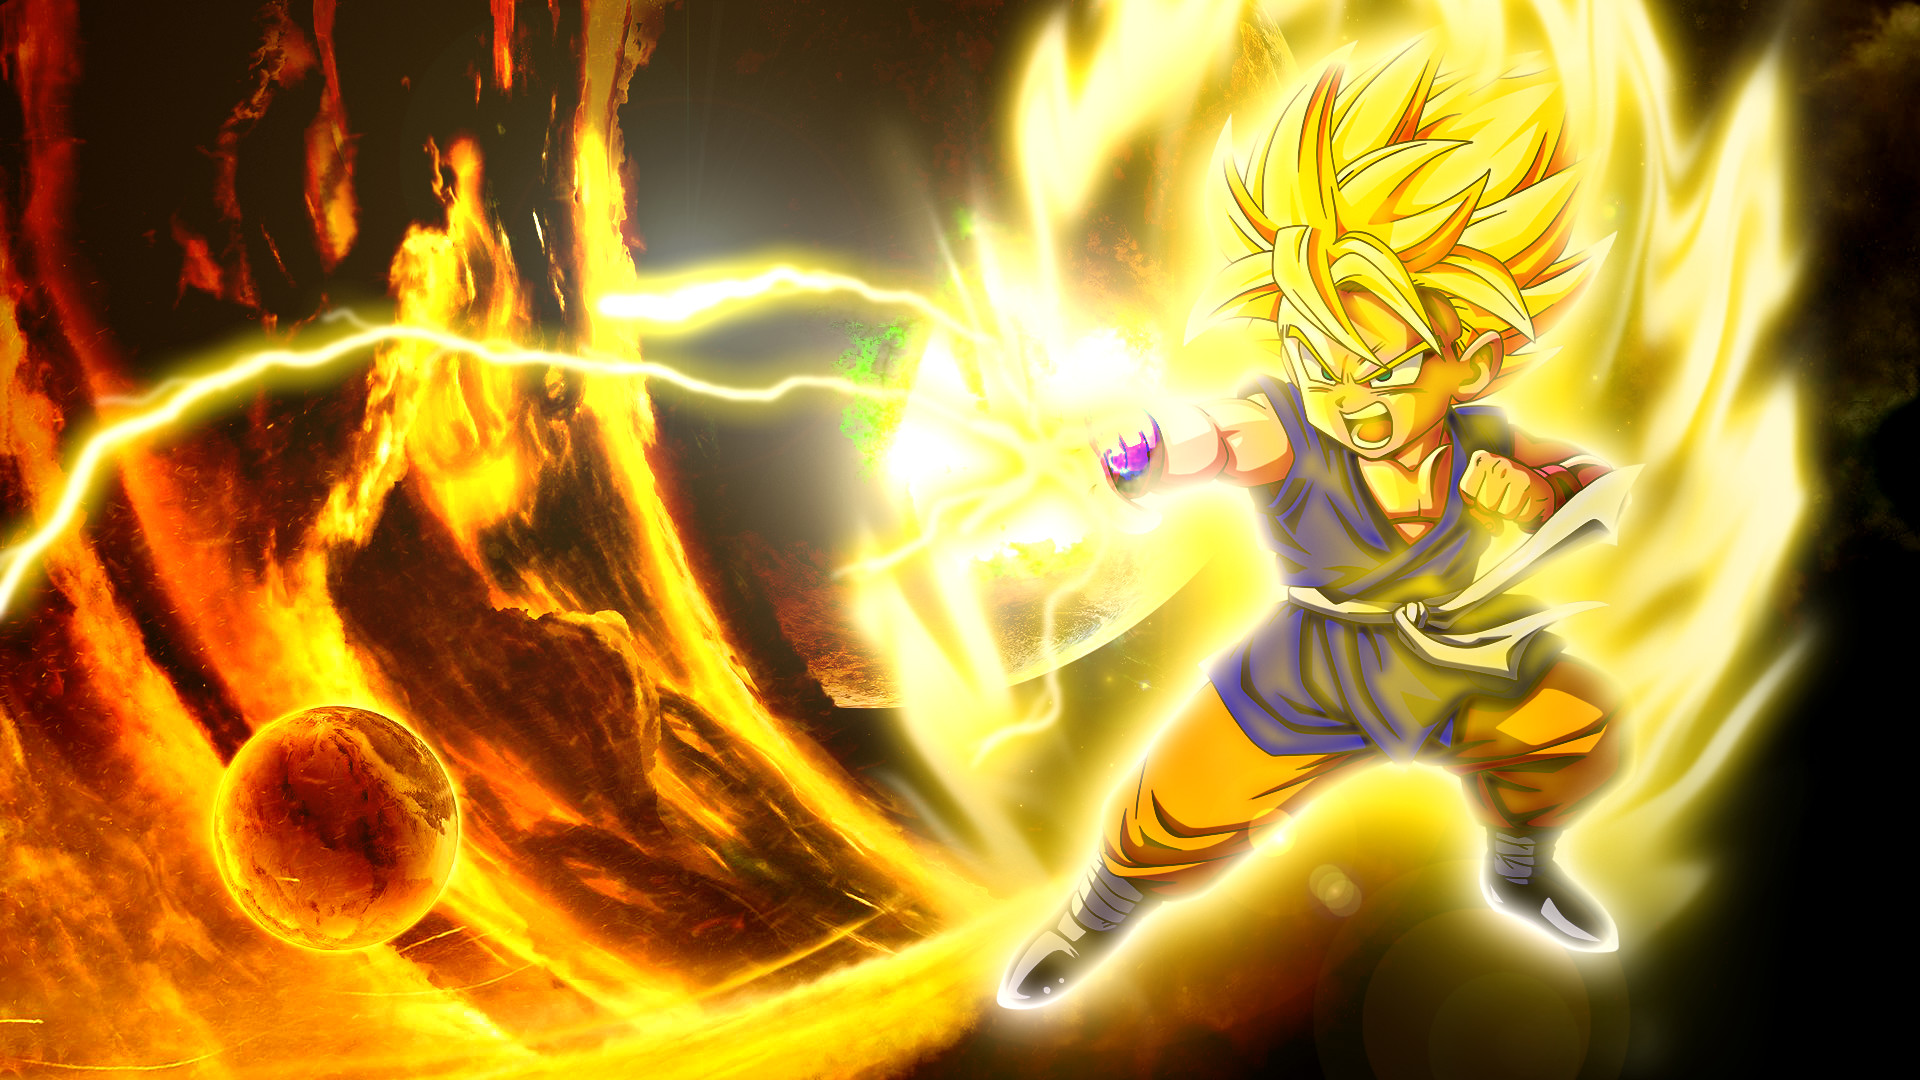 Kid Goku Dragon Ball Z by UzumakiAsh on DeviantArt